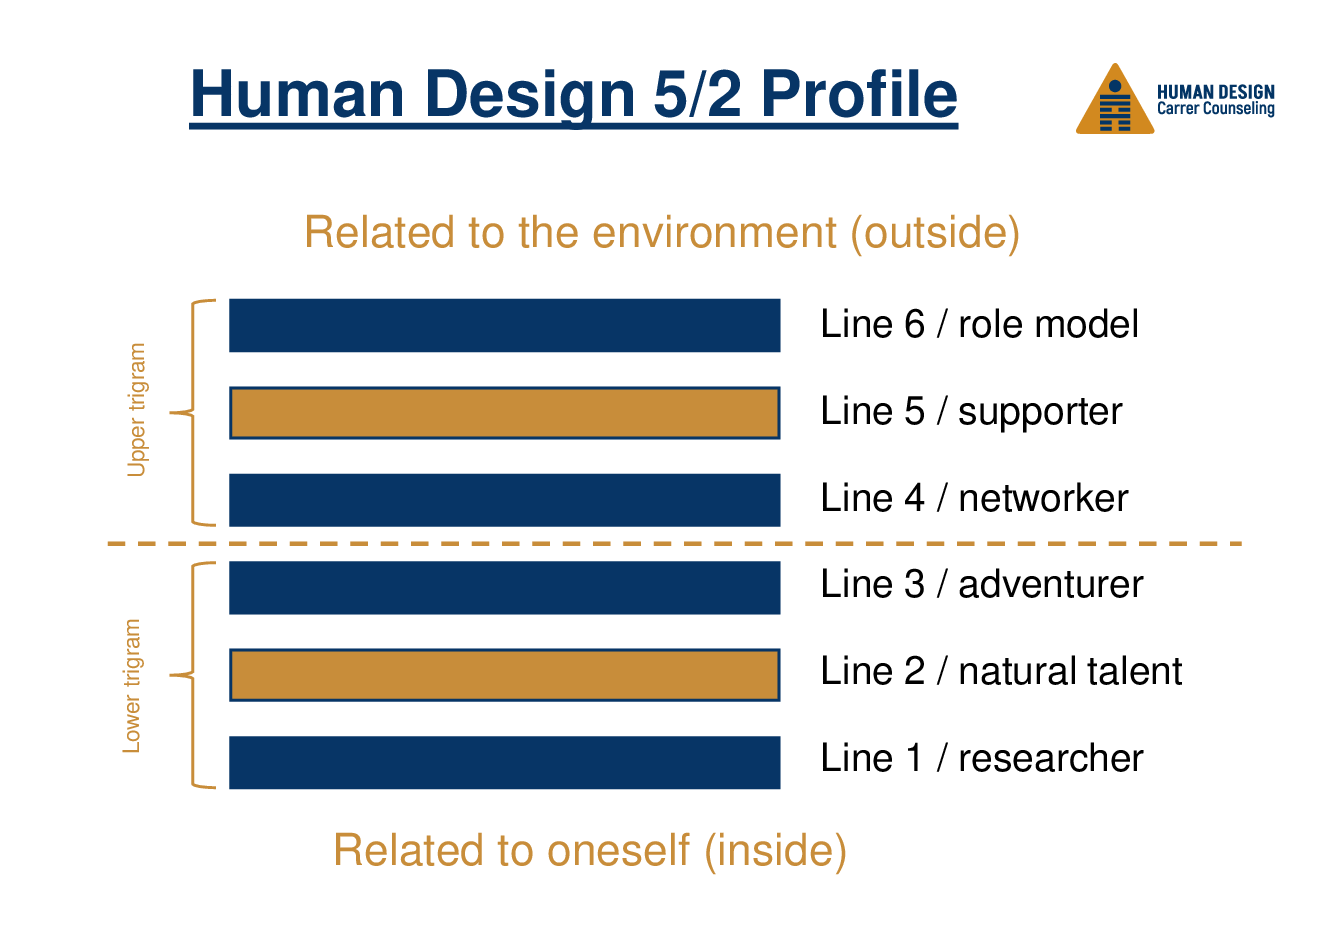 Human Design 5/2 Profile on the job